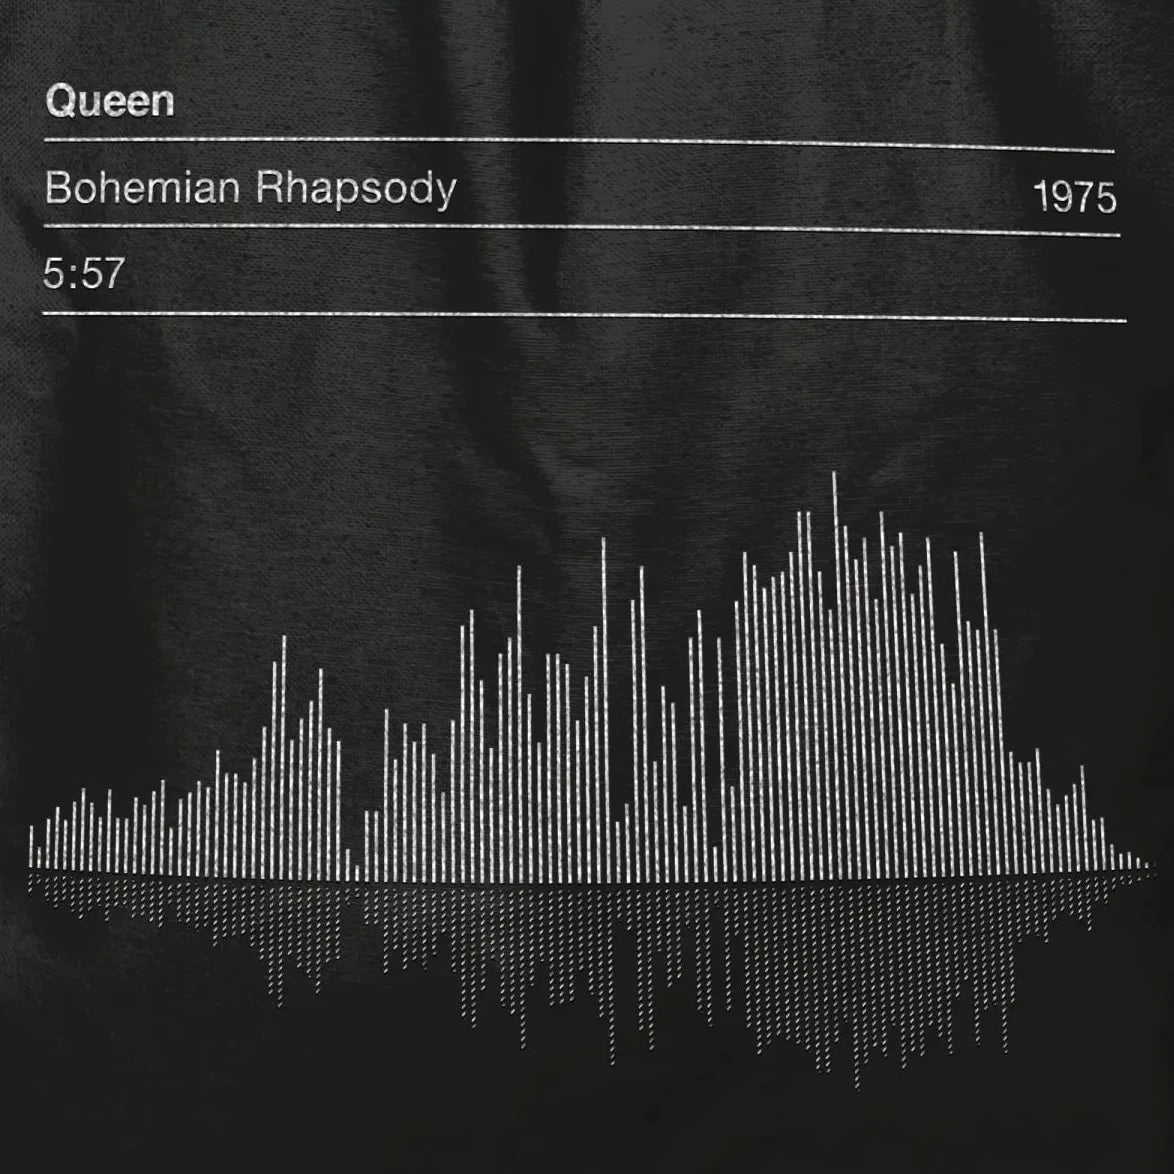 Queen Tote Bag| Bohemian Rhapsody | Graphic Tote Bag